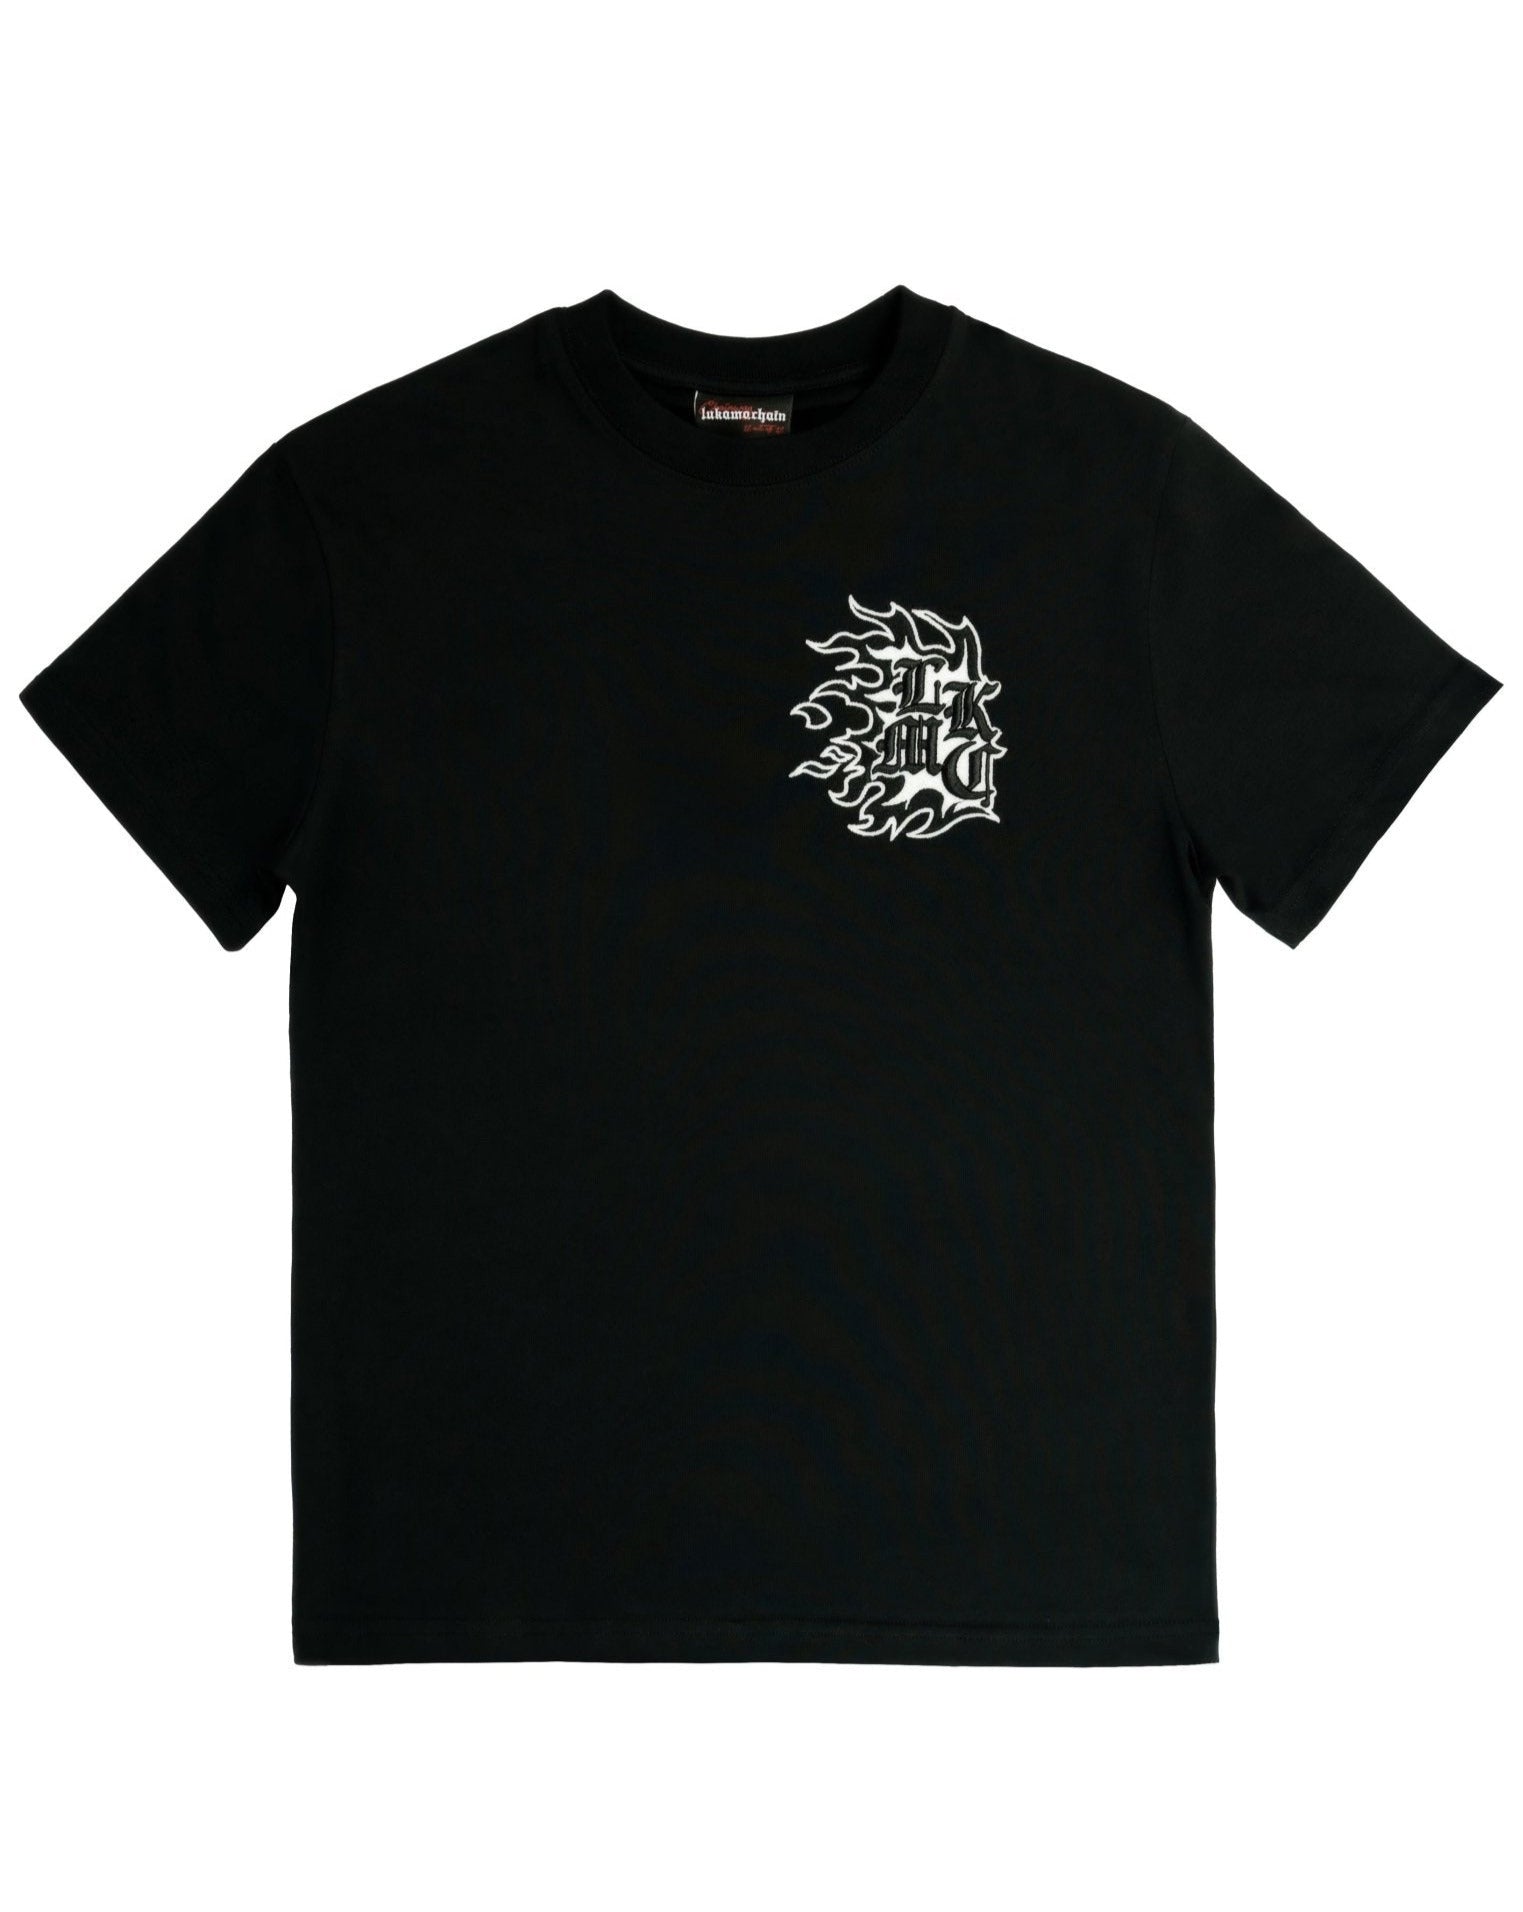 SS23 T-Shirt Black - lukamachain